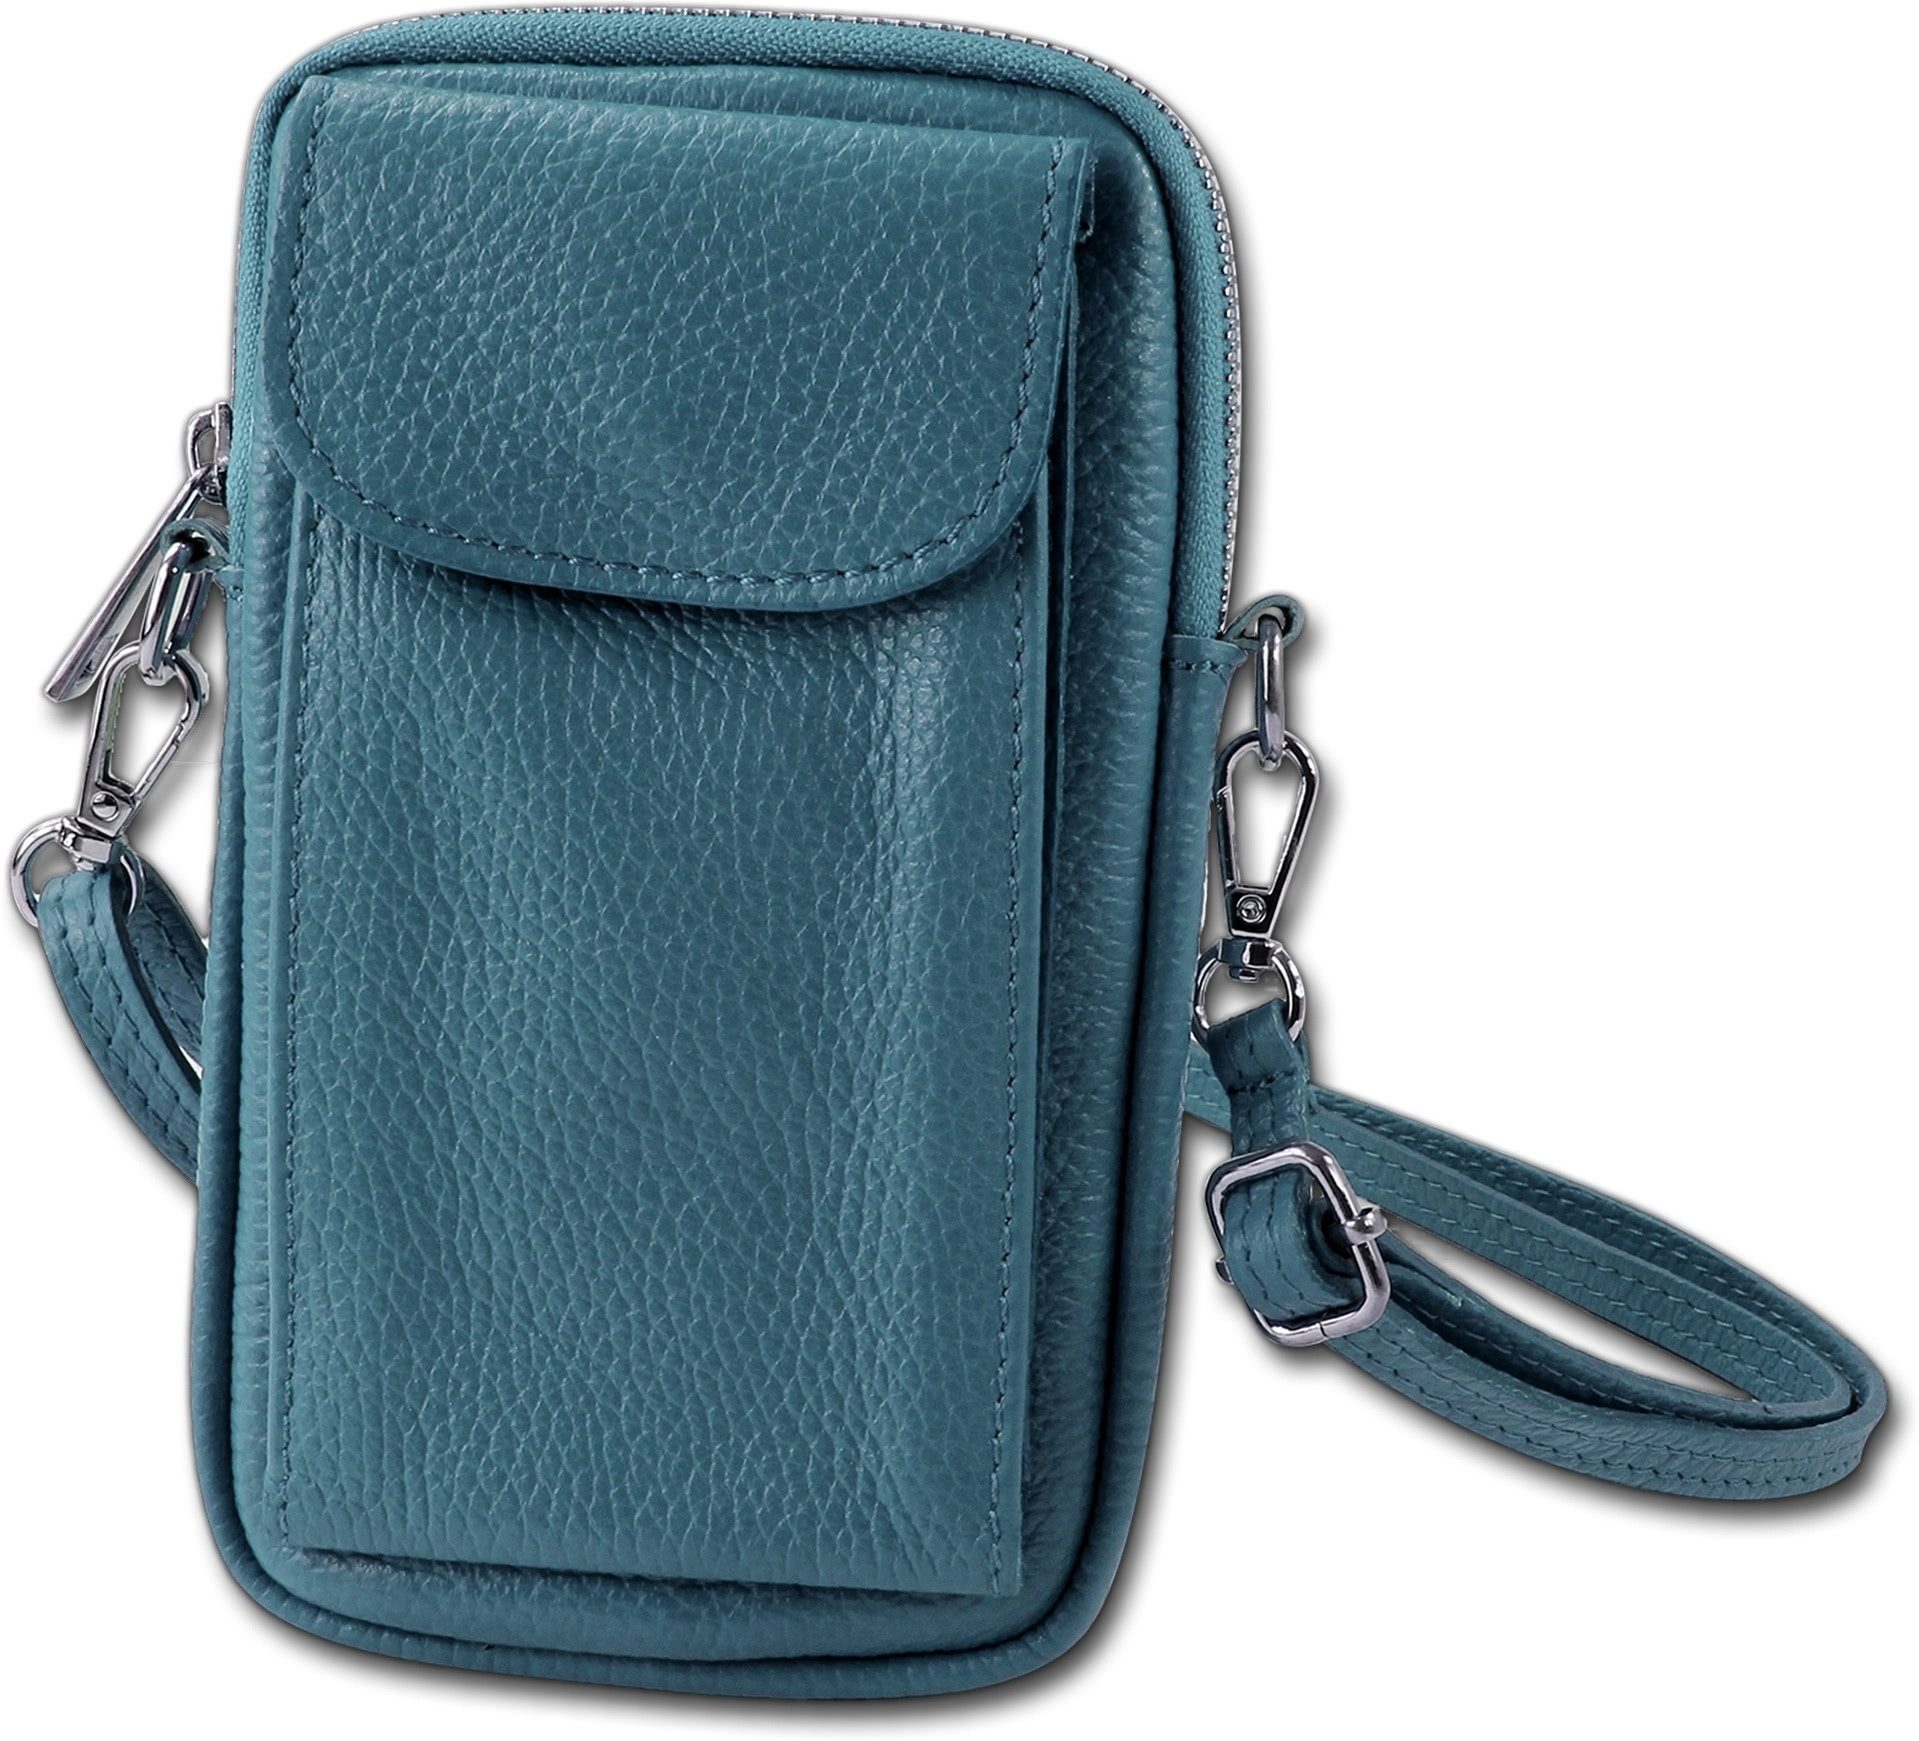 Toscanto Umhängetasche Toscanto Damen Umhängetasche Handtasche (Handtasche, Handtasche), Damen Tasche Echtes Leder hellblau, Made-In Italy ca. 12cm